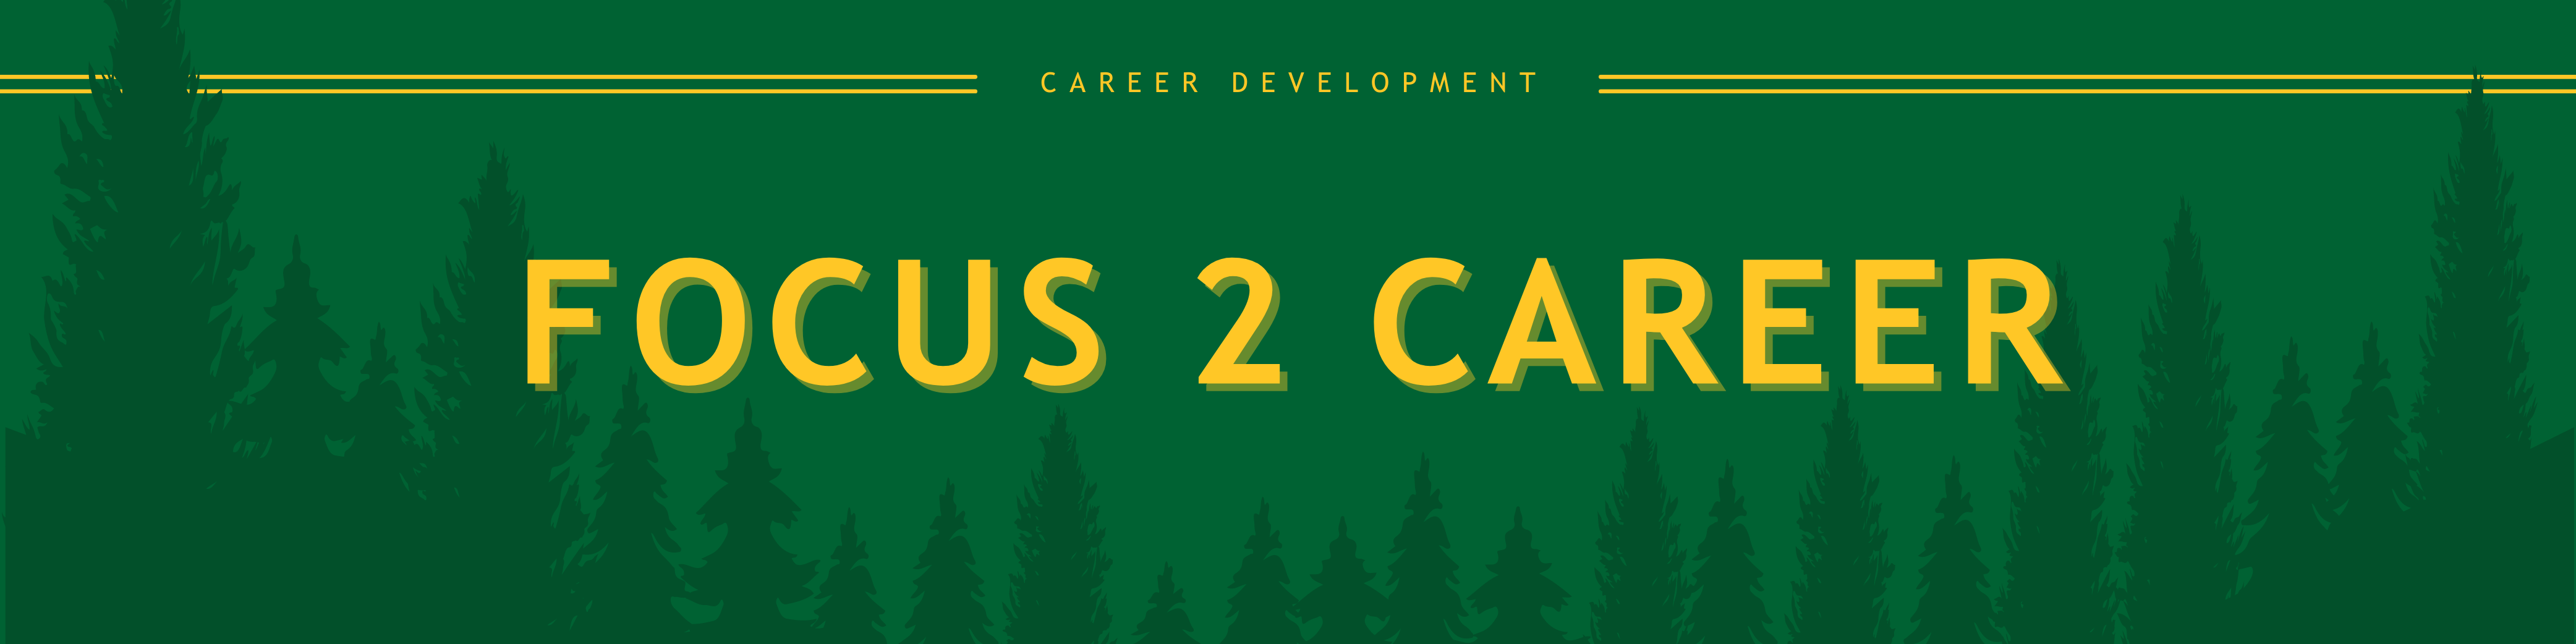 Focus 2 Career Banner